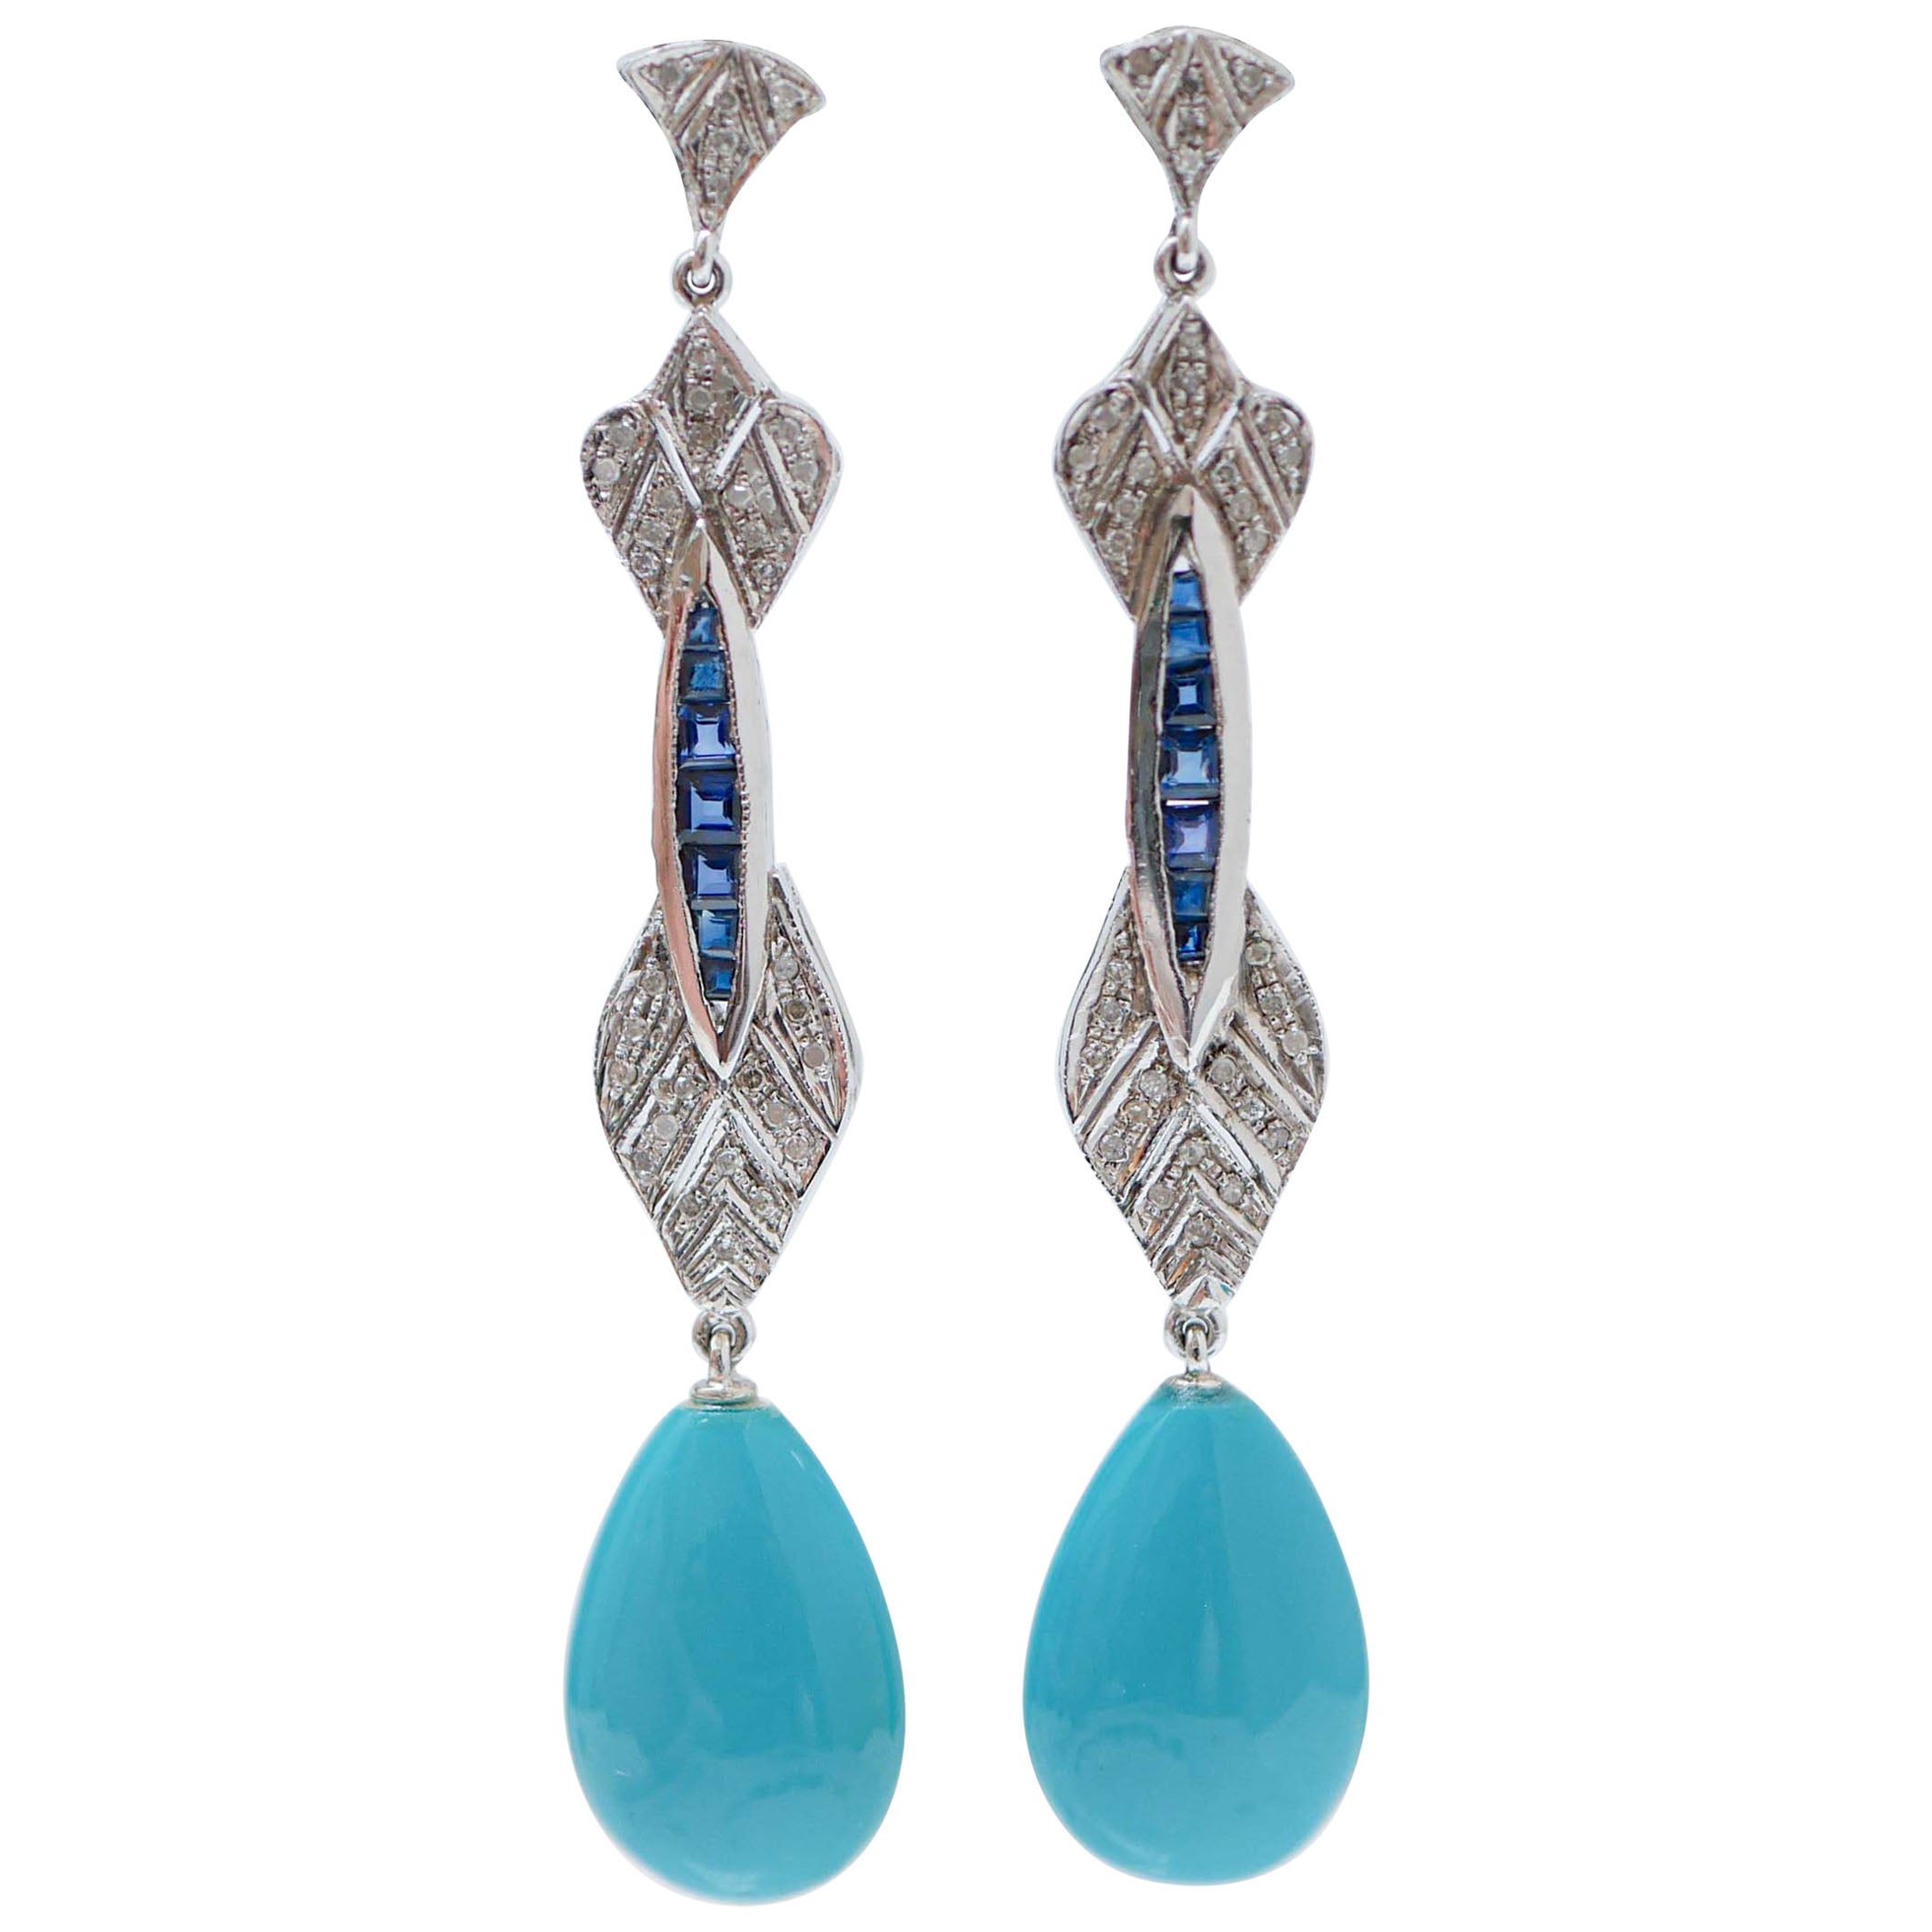 Turquoise, Sapphires, Diamonds, Platinum Dangle Earrings.